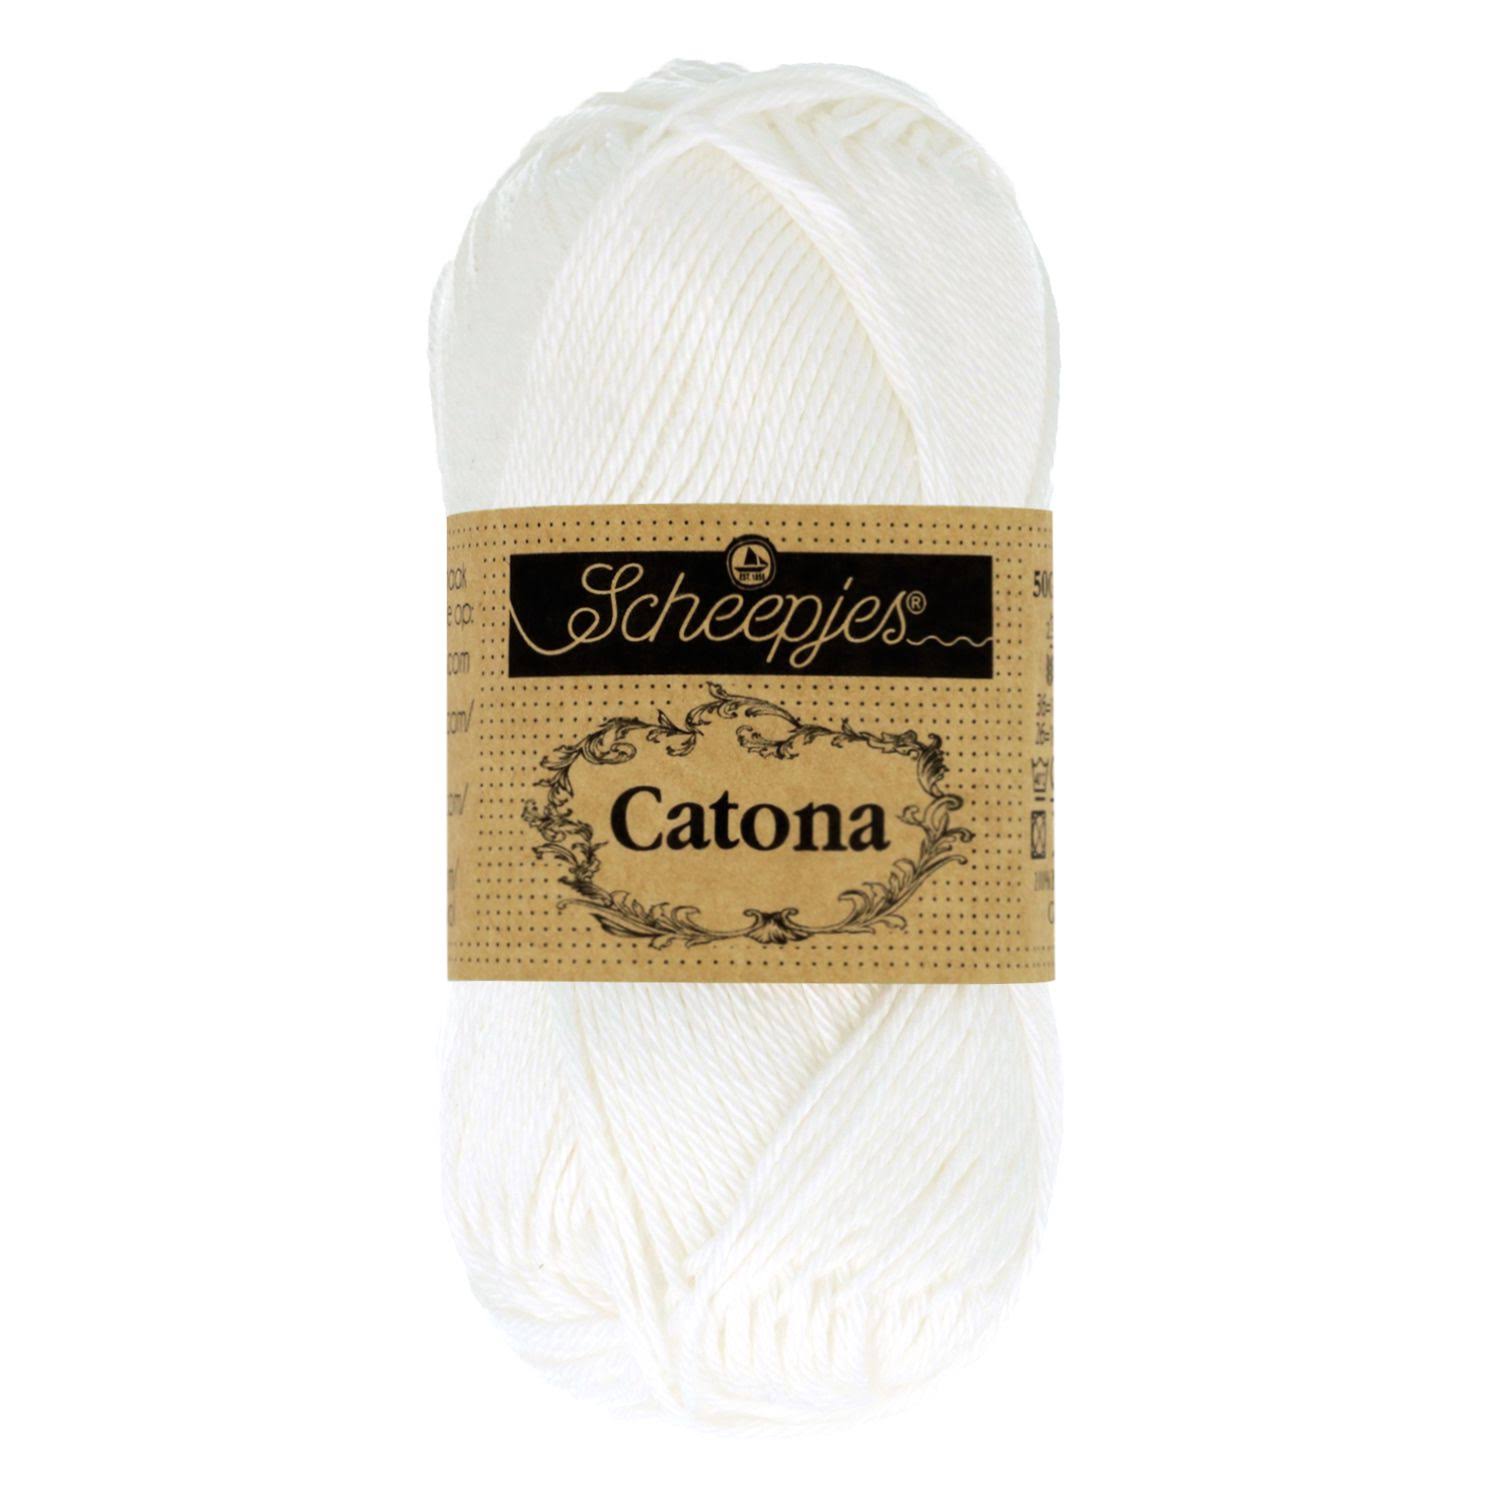 Scheepjes Catona 100g Knitting Yarn Beige/Old Lace (130)